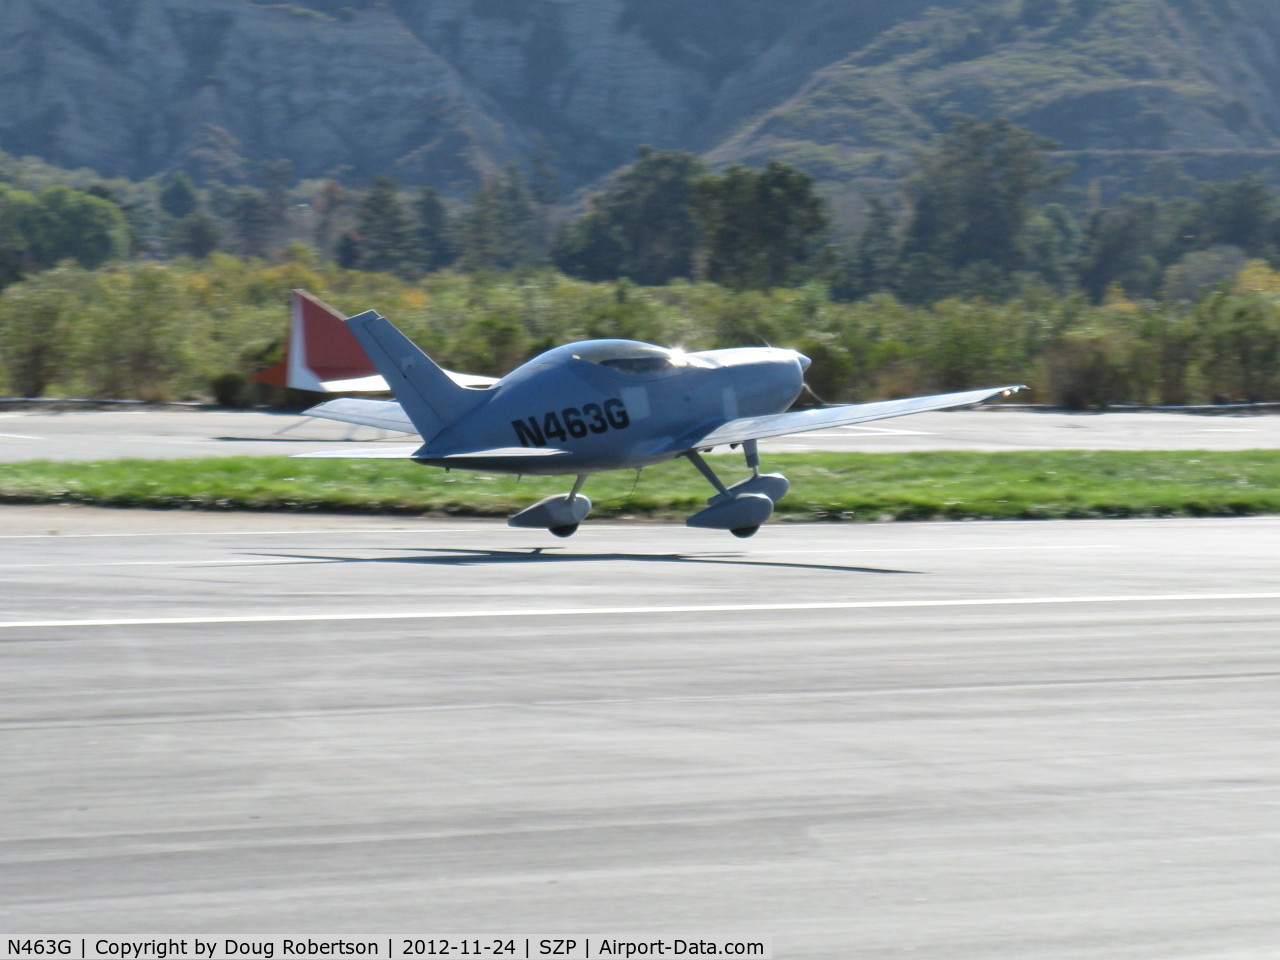 N463G, 2007 Questair Venture C/N 001, 2007 GRIFFIN SPECIAL Questair VENTURE SPIRIT, Continental IO-550-G 310 Hp, fixed-gear version, takeoff Rwy 22